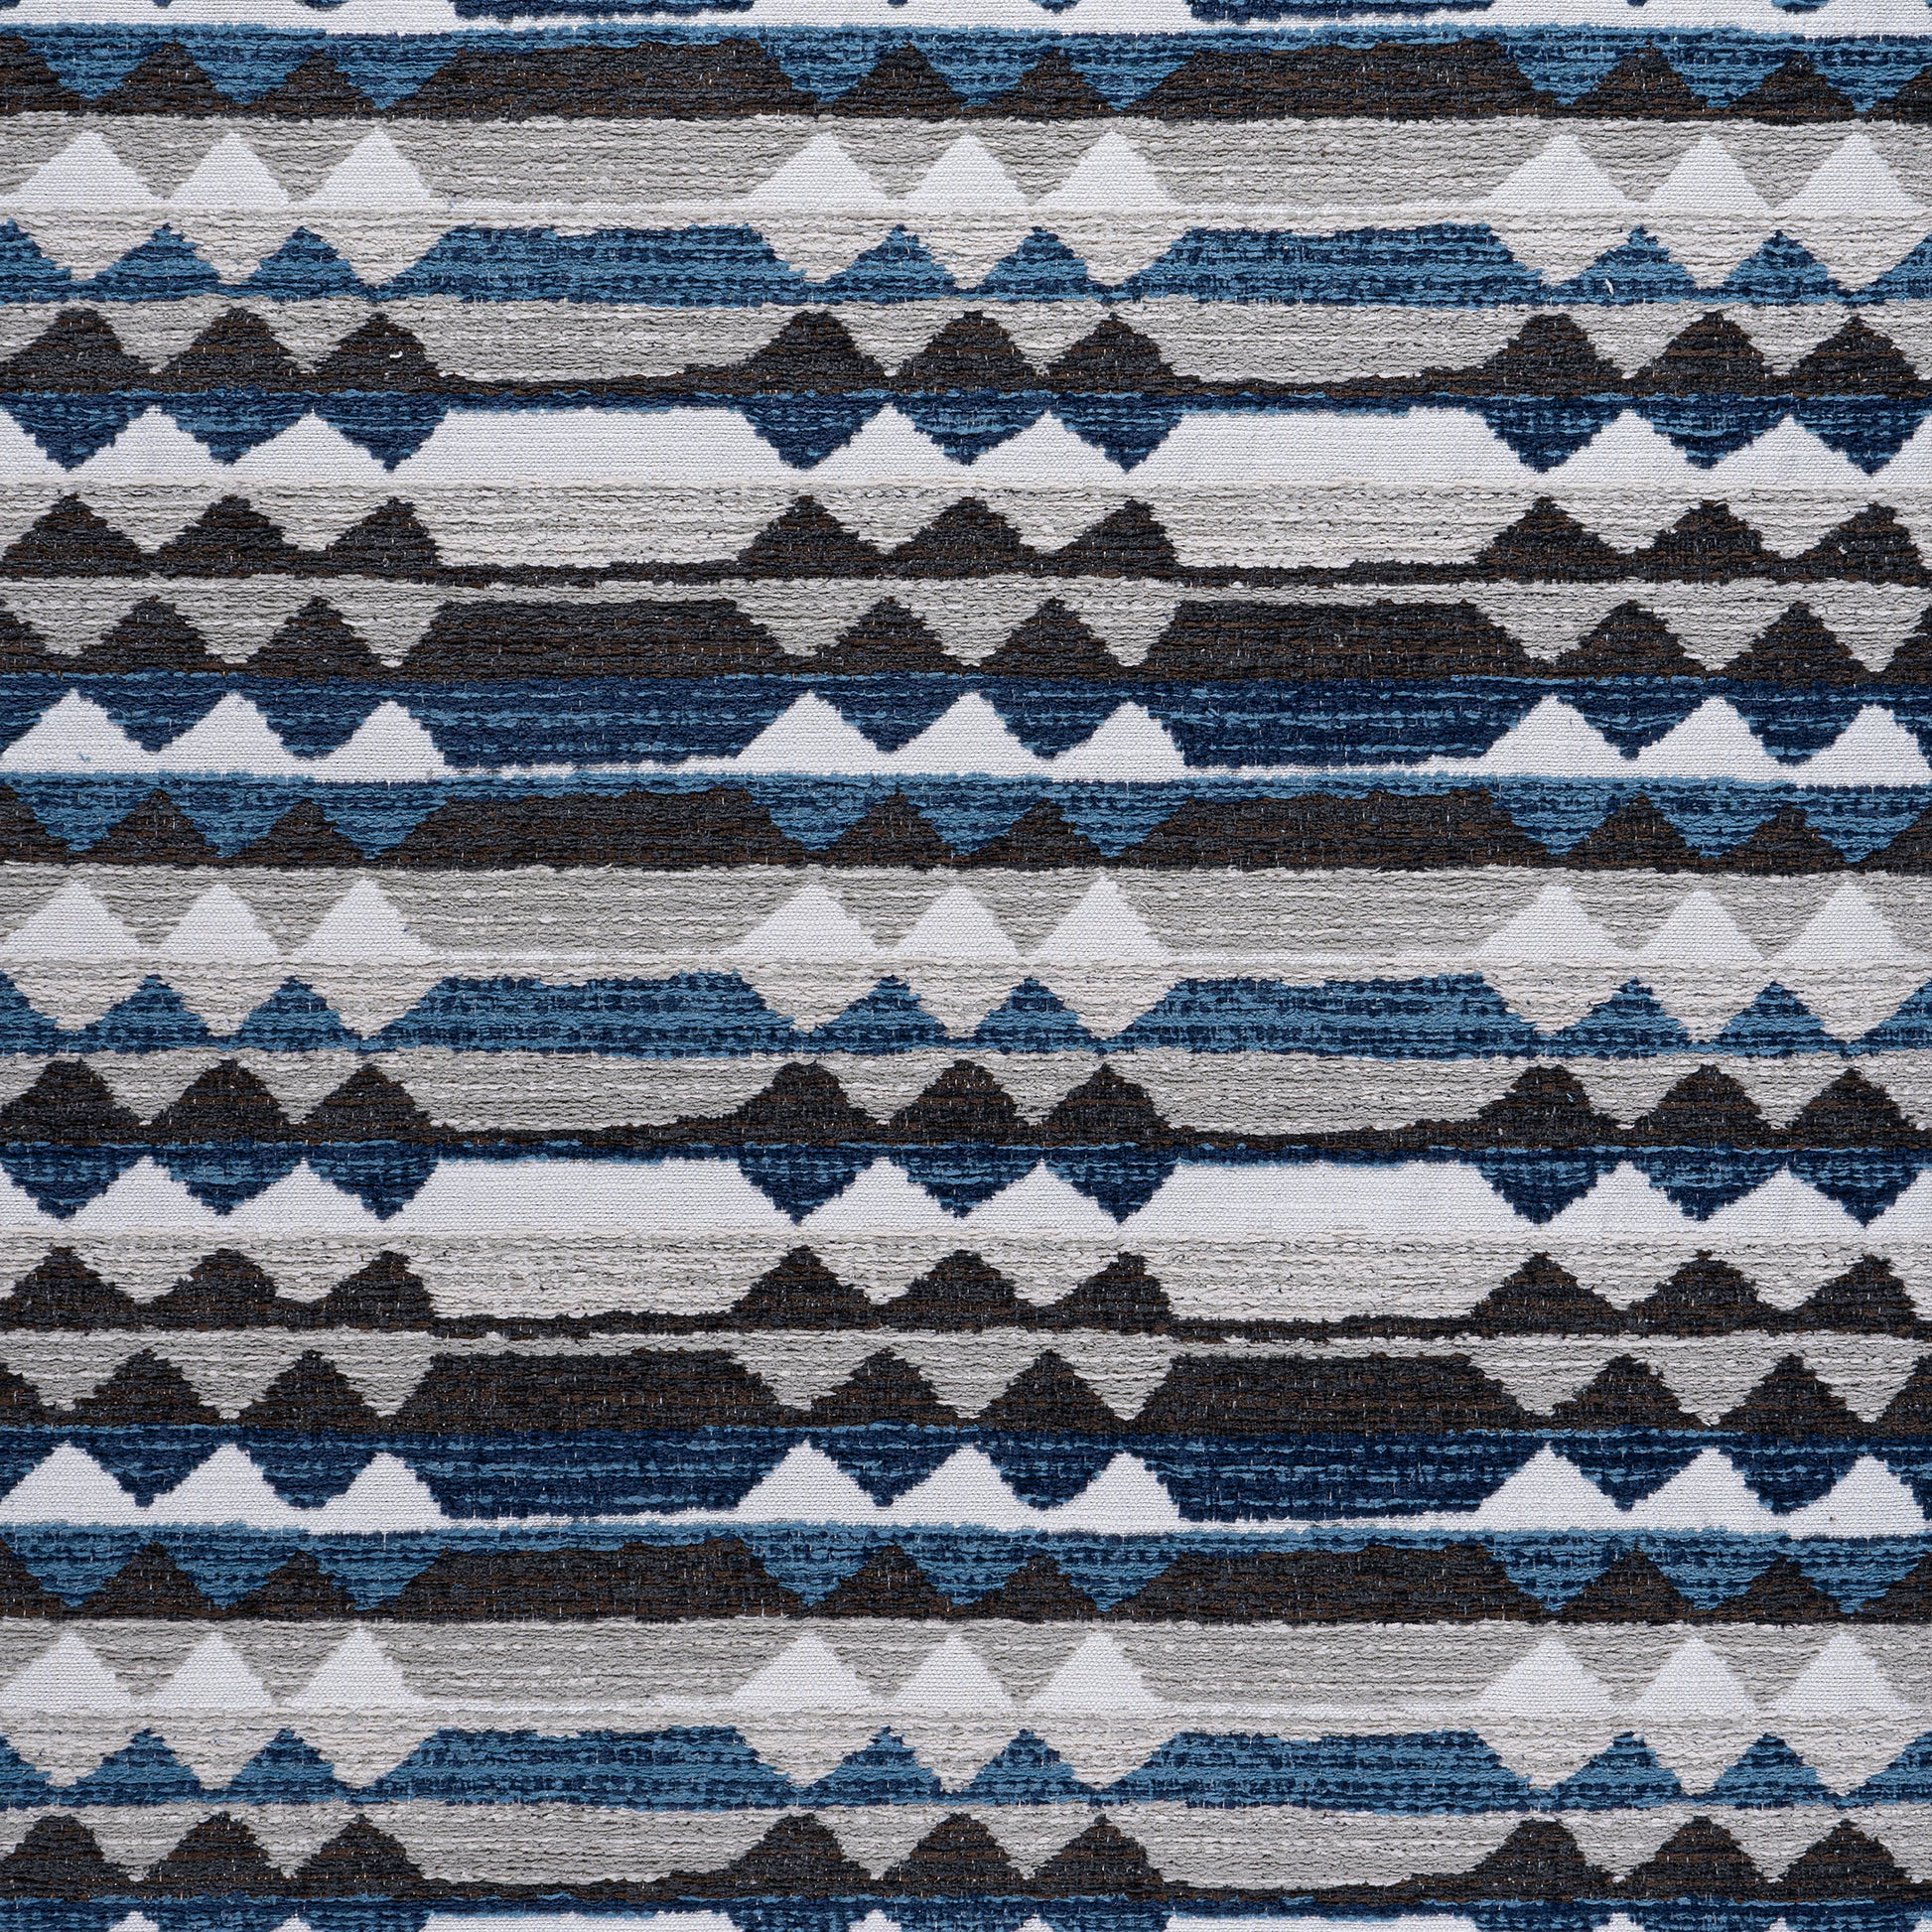 Purchase Thibaut Fabric Item# W78380 pattern name Saranac color Midnight